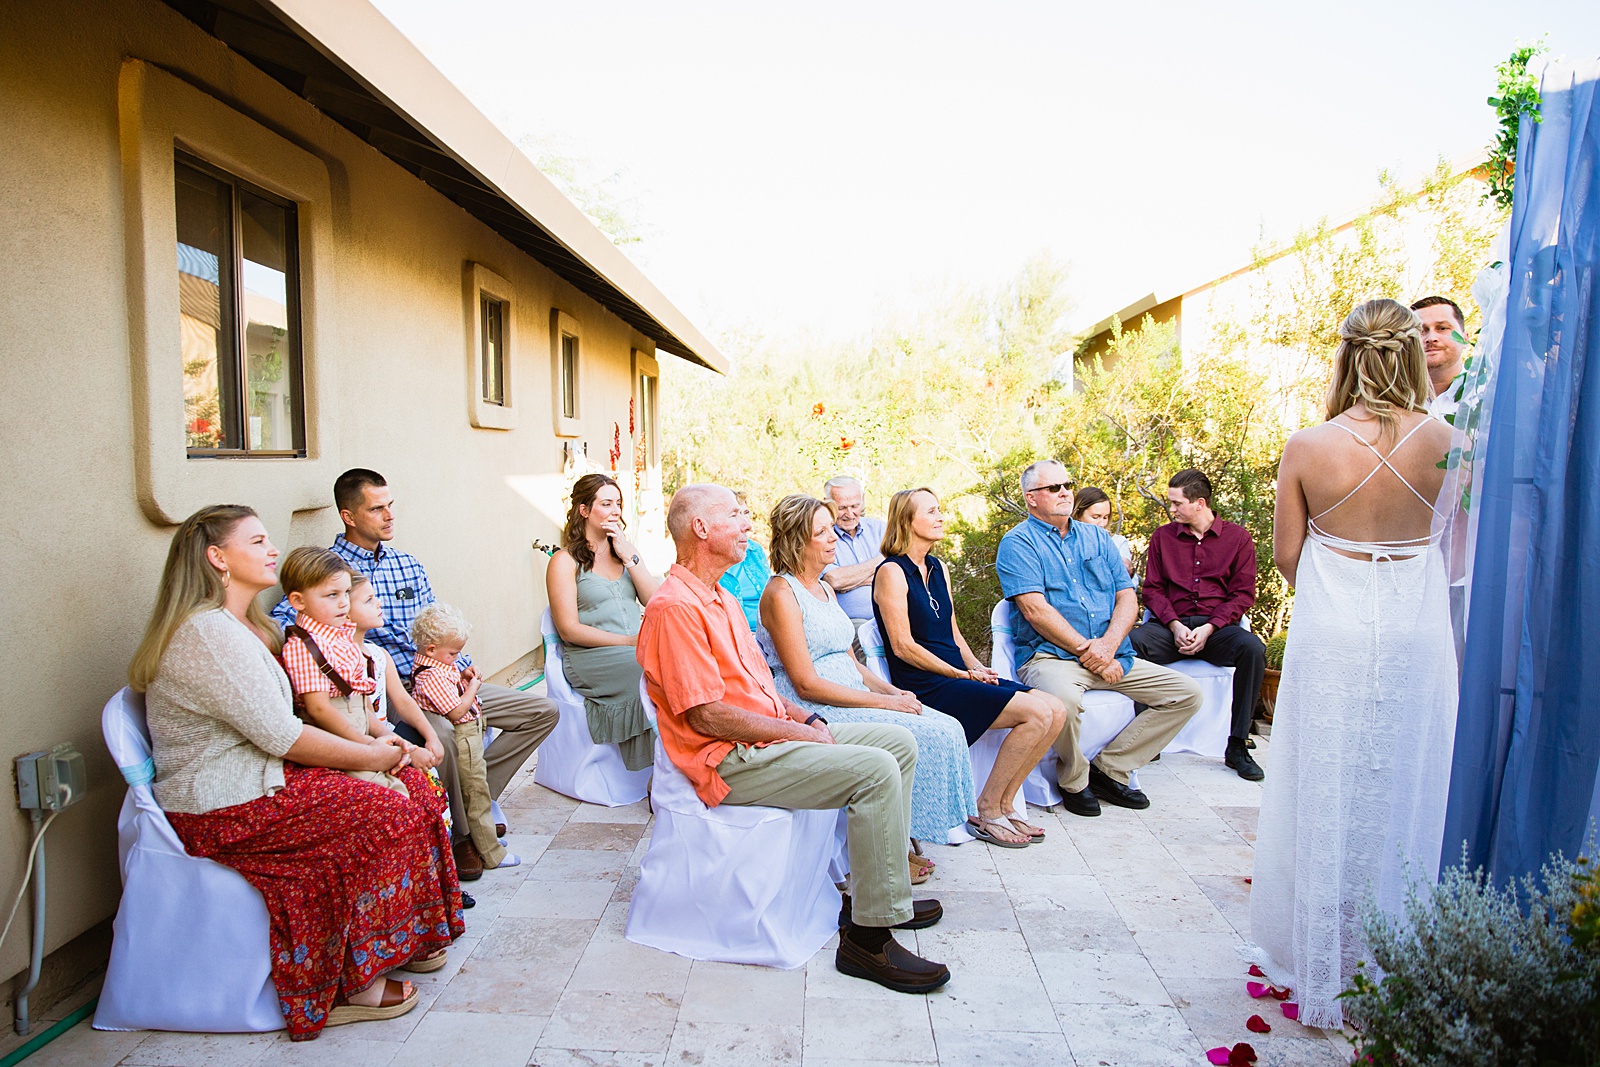 Wedding ceremony at a backyard by Phoenix wedding photographer PMA Photography.